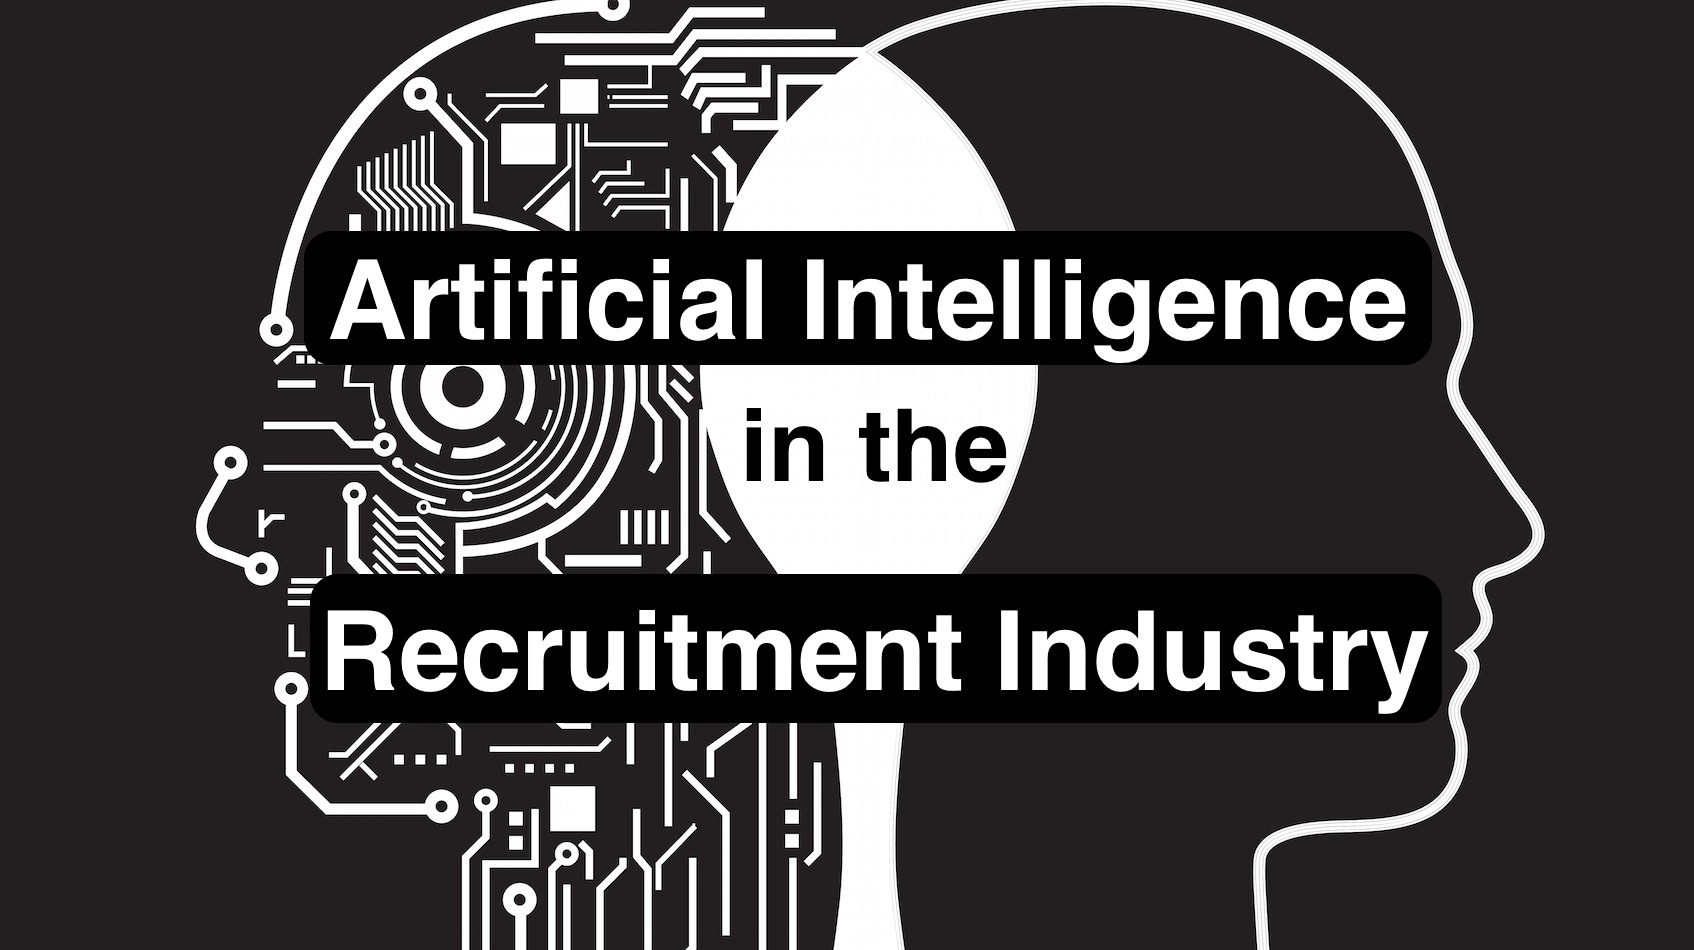 Eric Dalius: An Advocate for AI in Recruitment Process